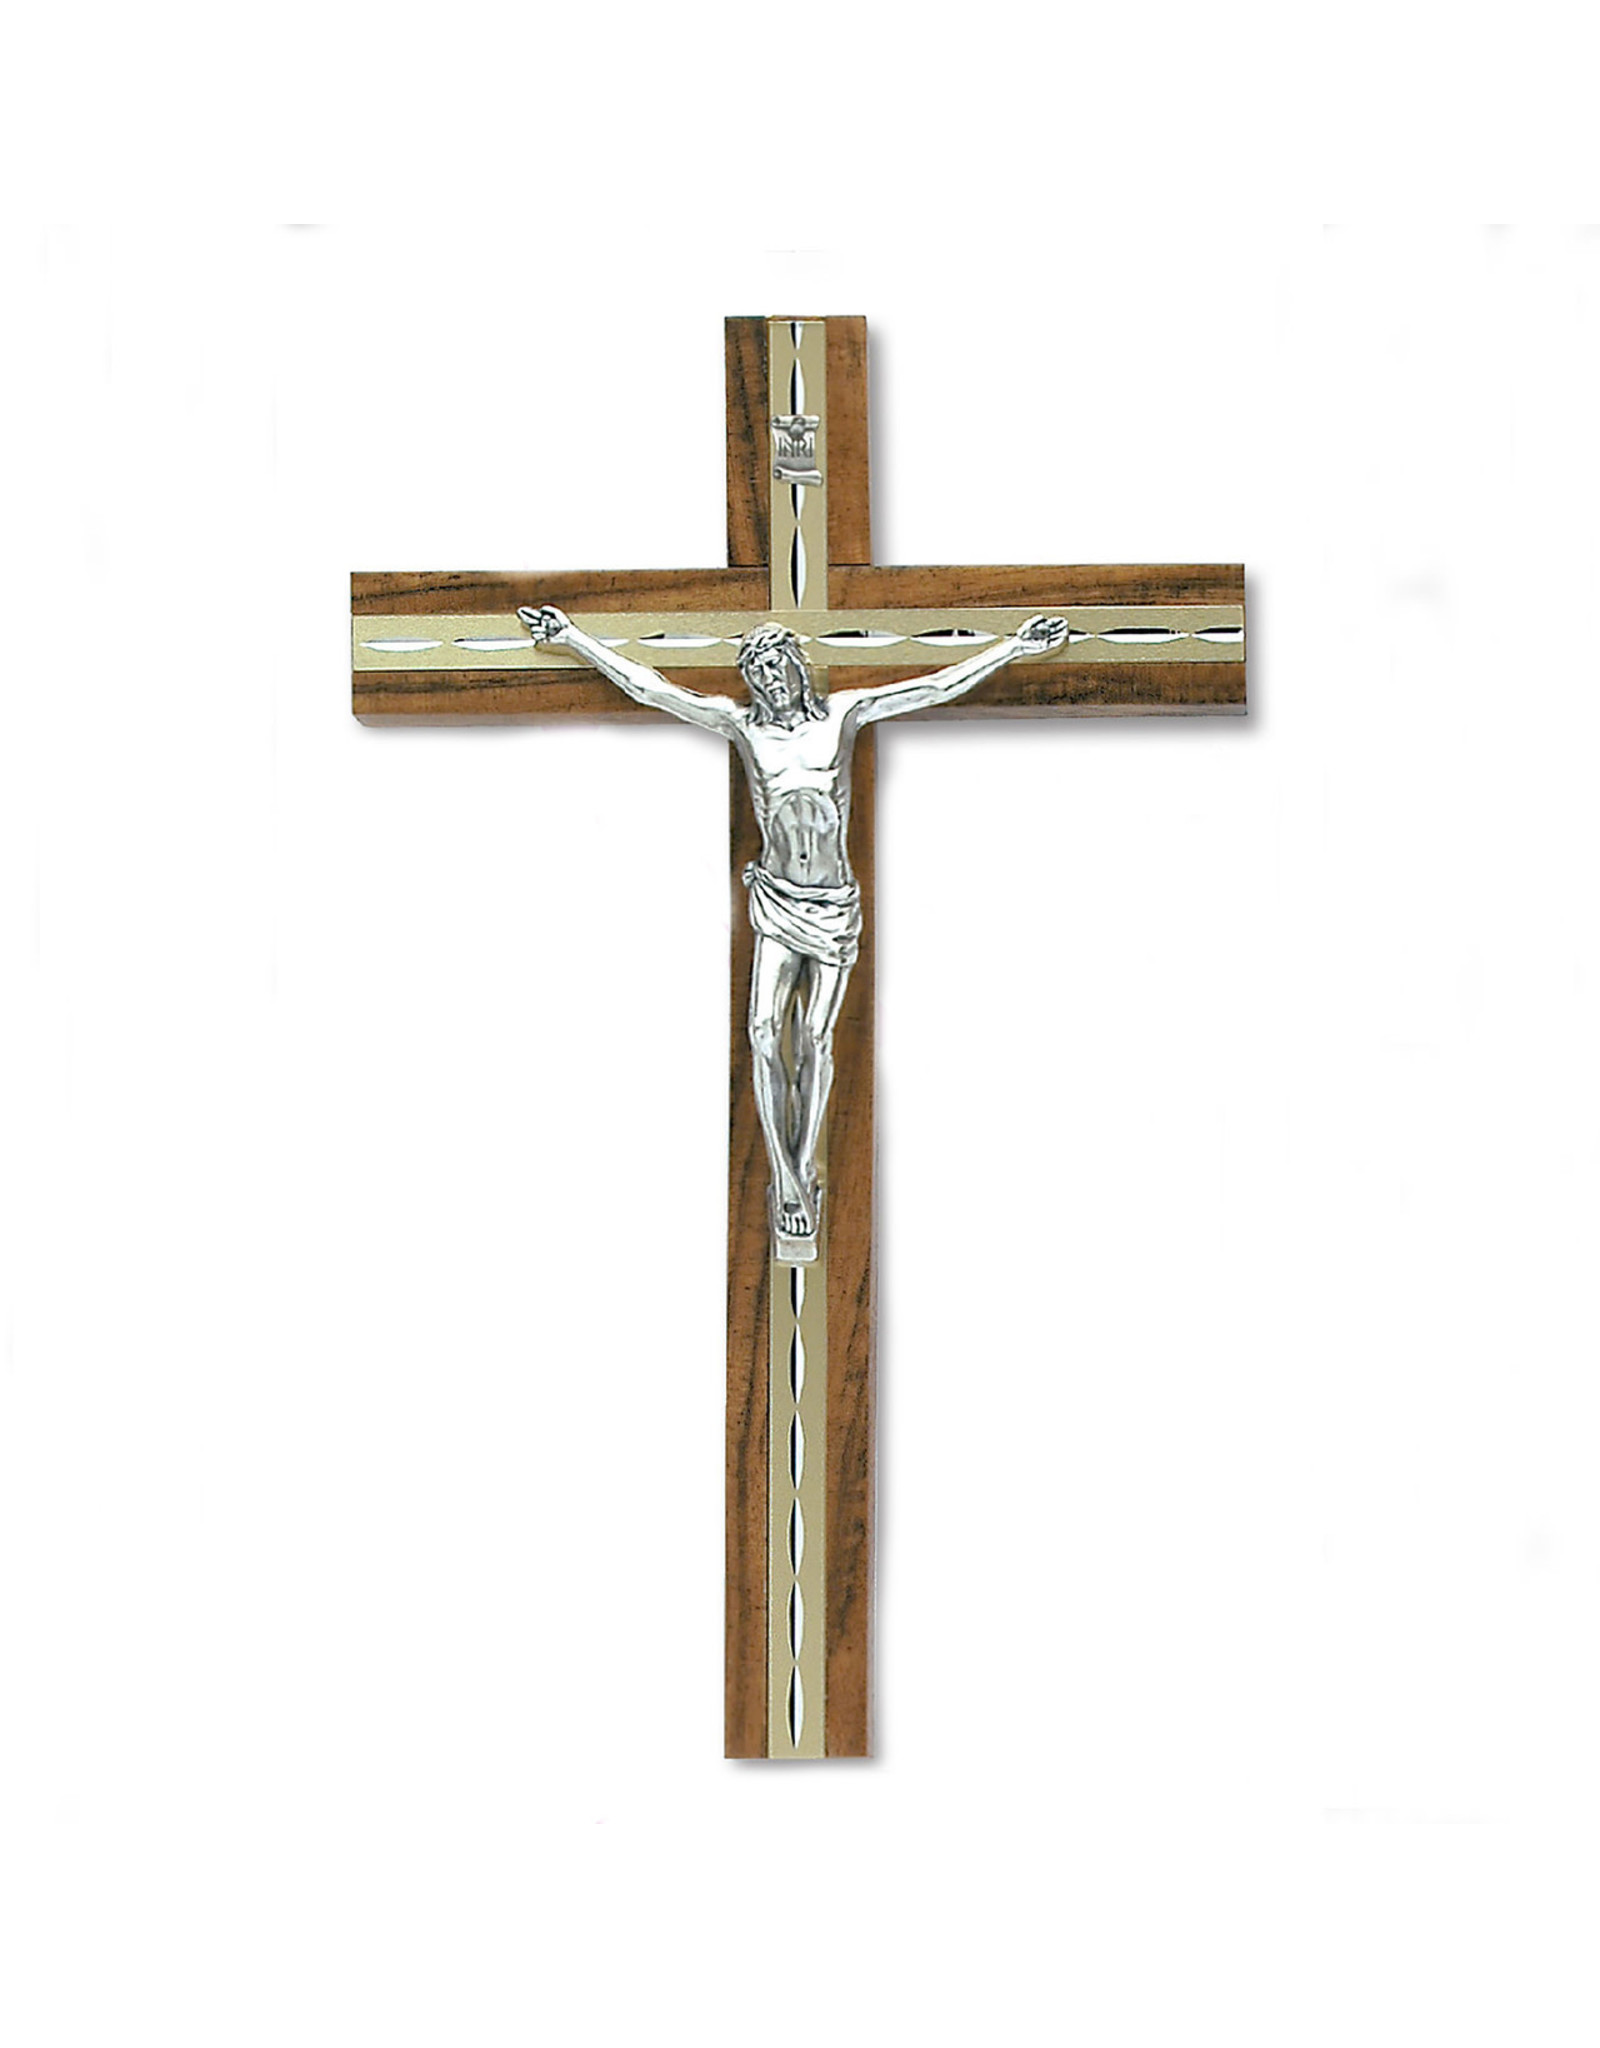 Lumen Mundi Crucifix - Gold/Medium Oak Wood Cross with Silver Tone Corpus (10")